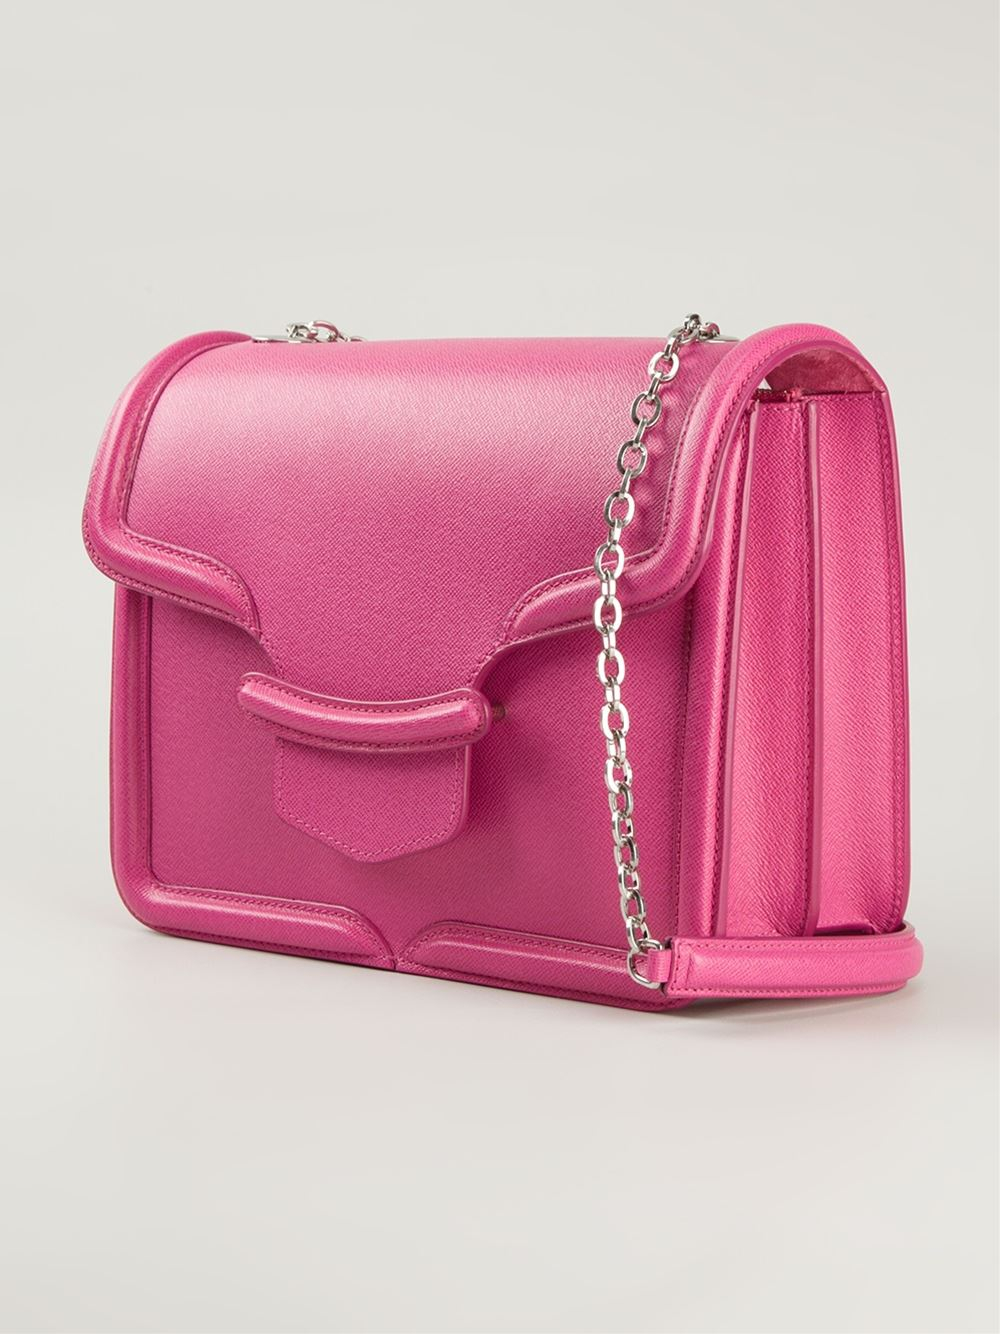 Lyst - Alexander Mcqueen Heroine Large Calf-Leather Shoulder Bag in Pink